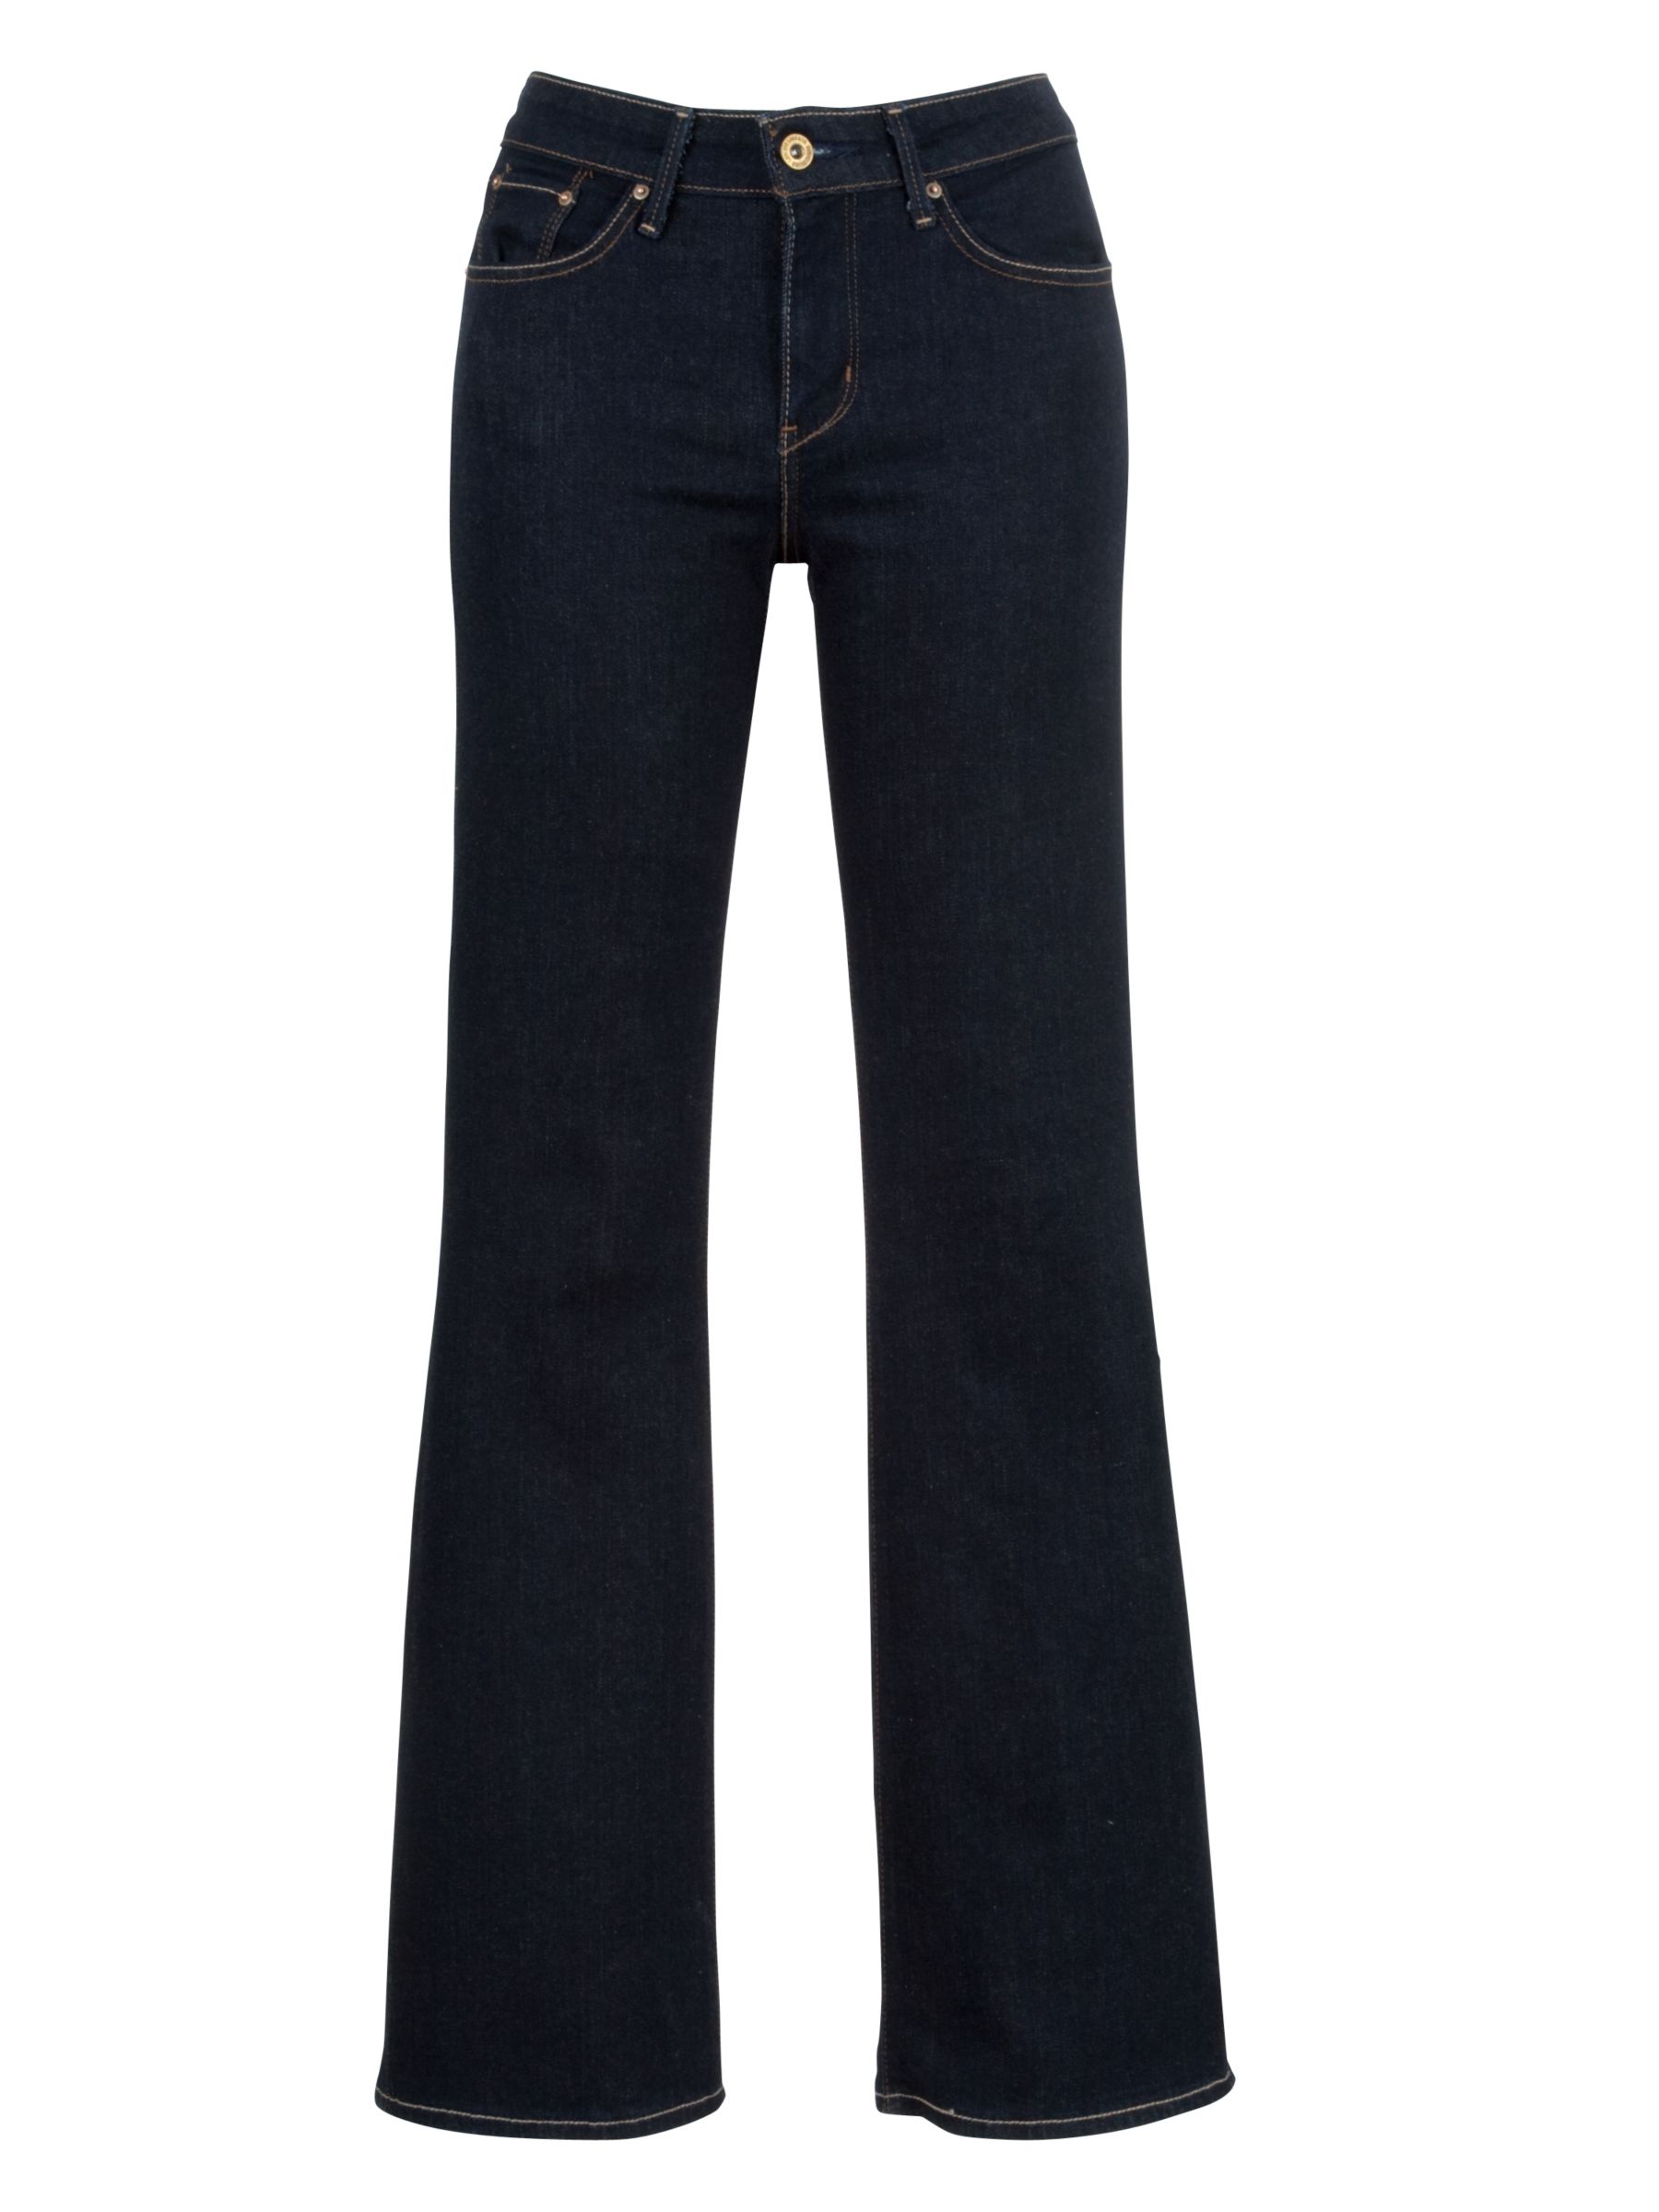 Levi's Curve ID - Demi Curve Bootcut Jeans, Indigo at John Lewis & Partners